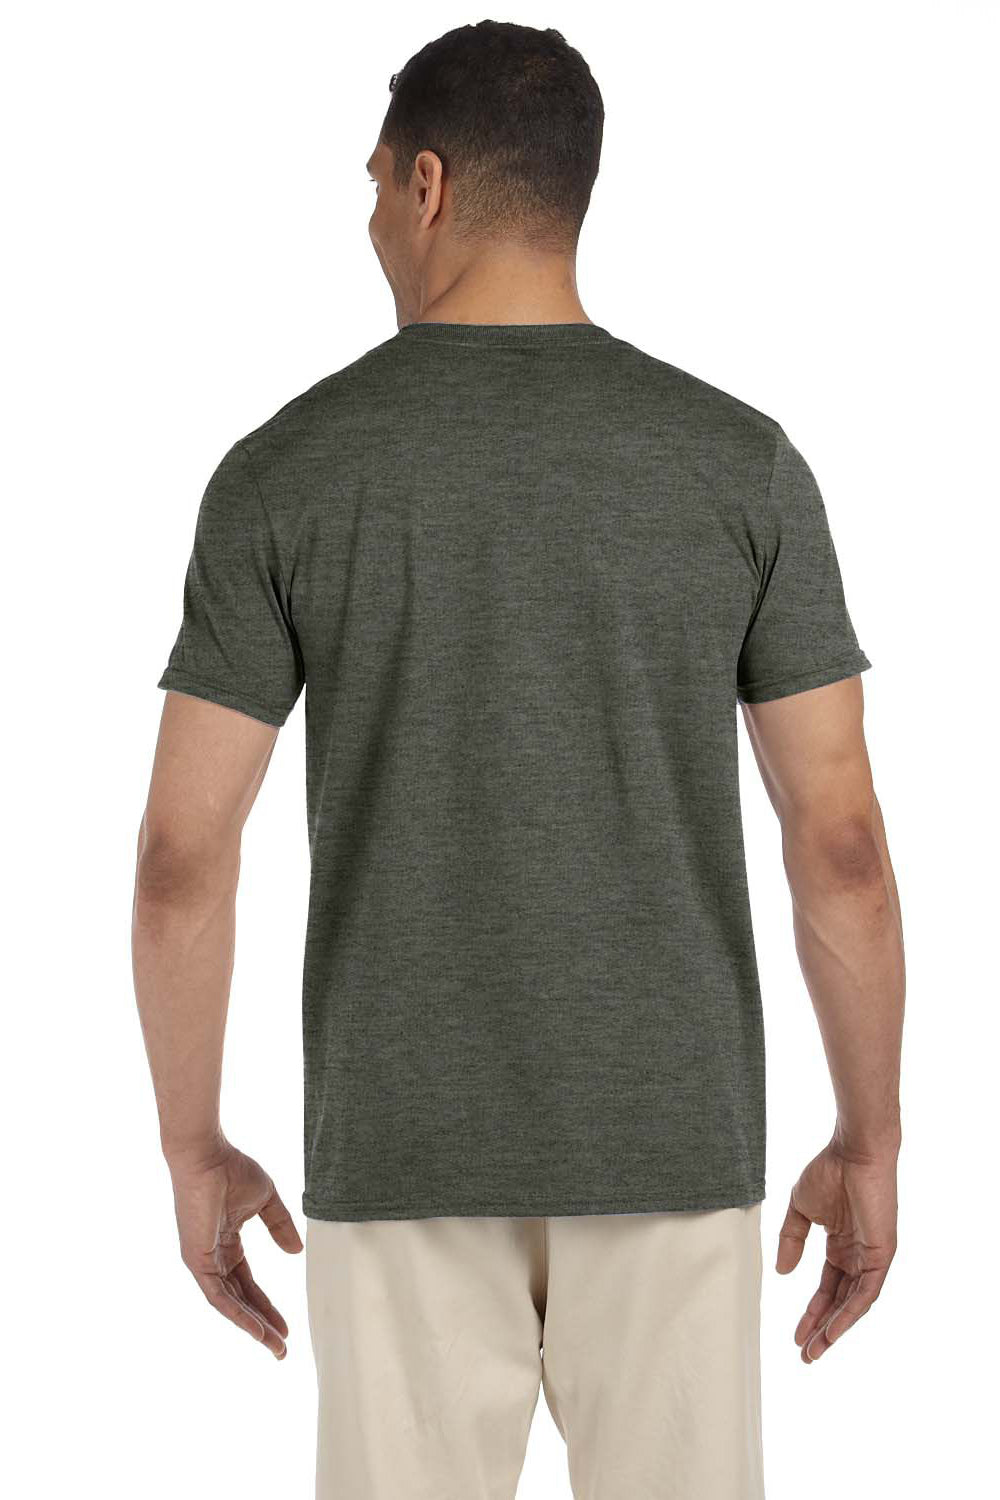 Gildan G640 Mens Softstyle Short Sleeve Crewneck T-Shirt Heather Military Green Back